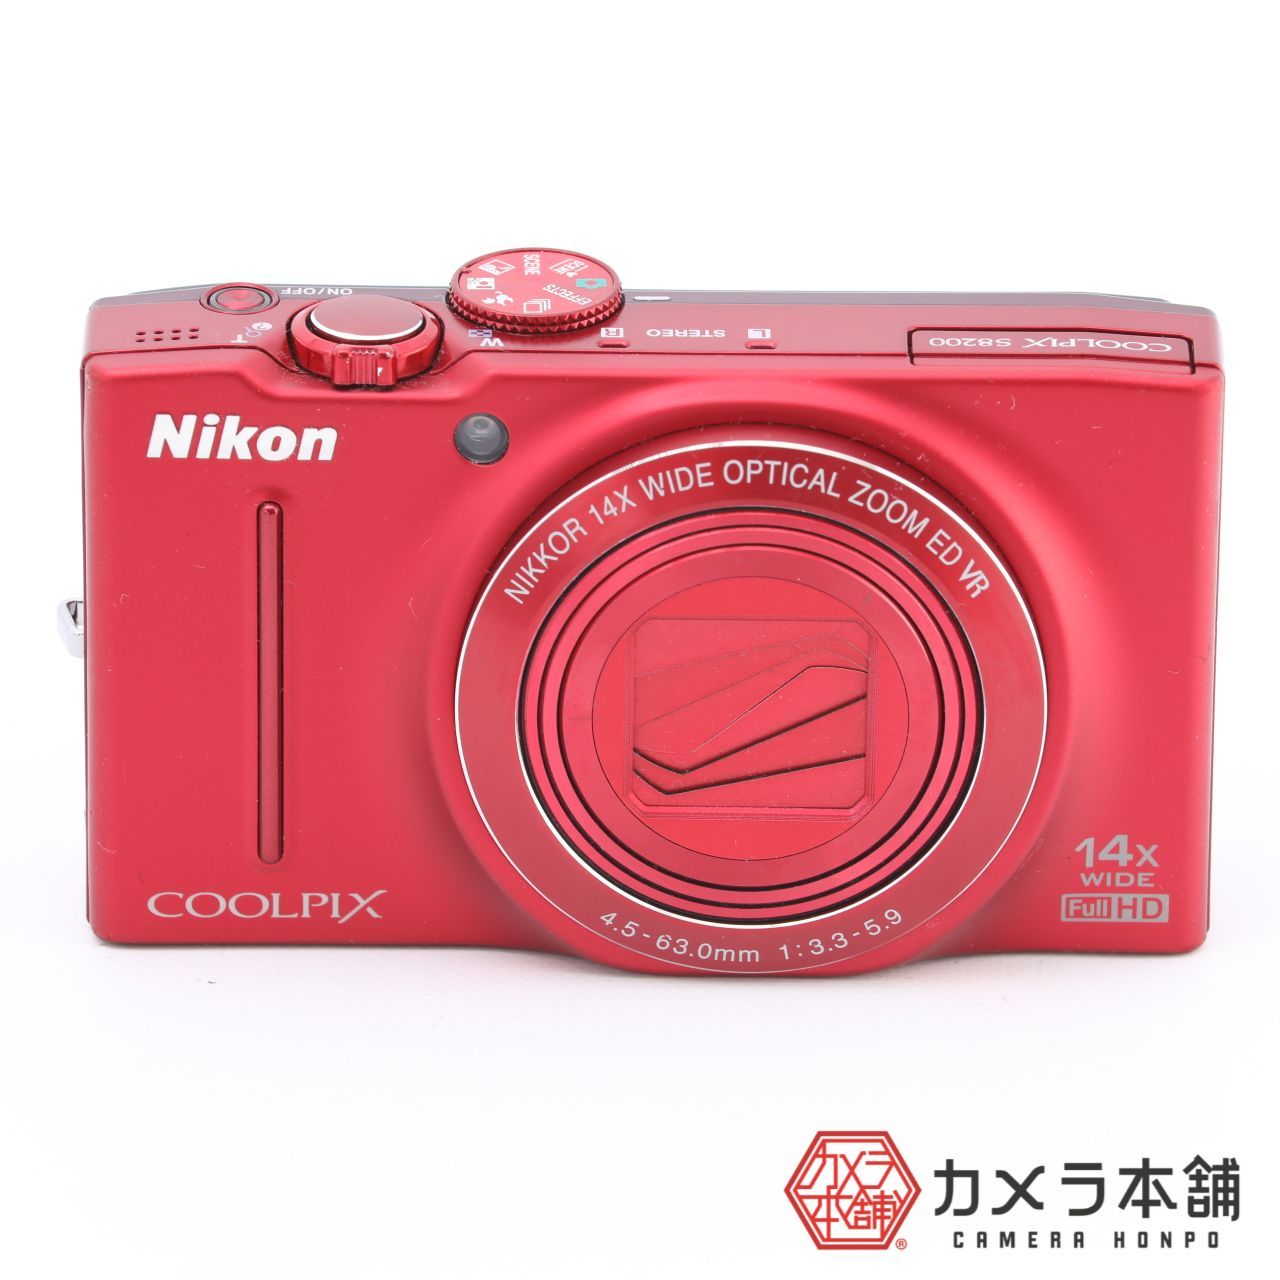 Nikon デジタルカメラ COOLPIX S8200 S8200RD カメラ本舗｜Camera honpo メルカリ